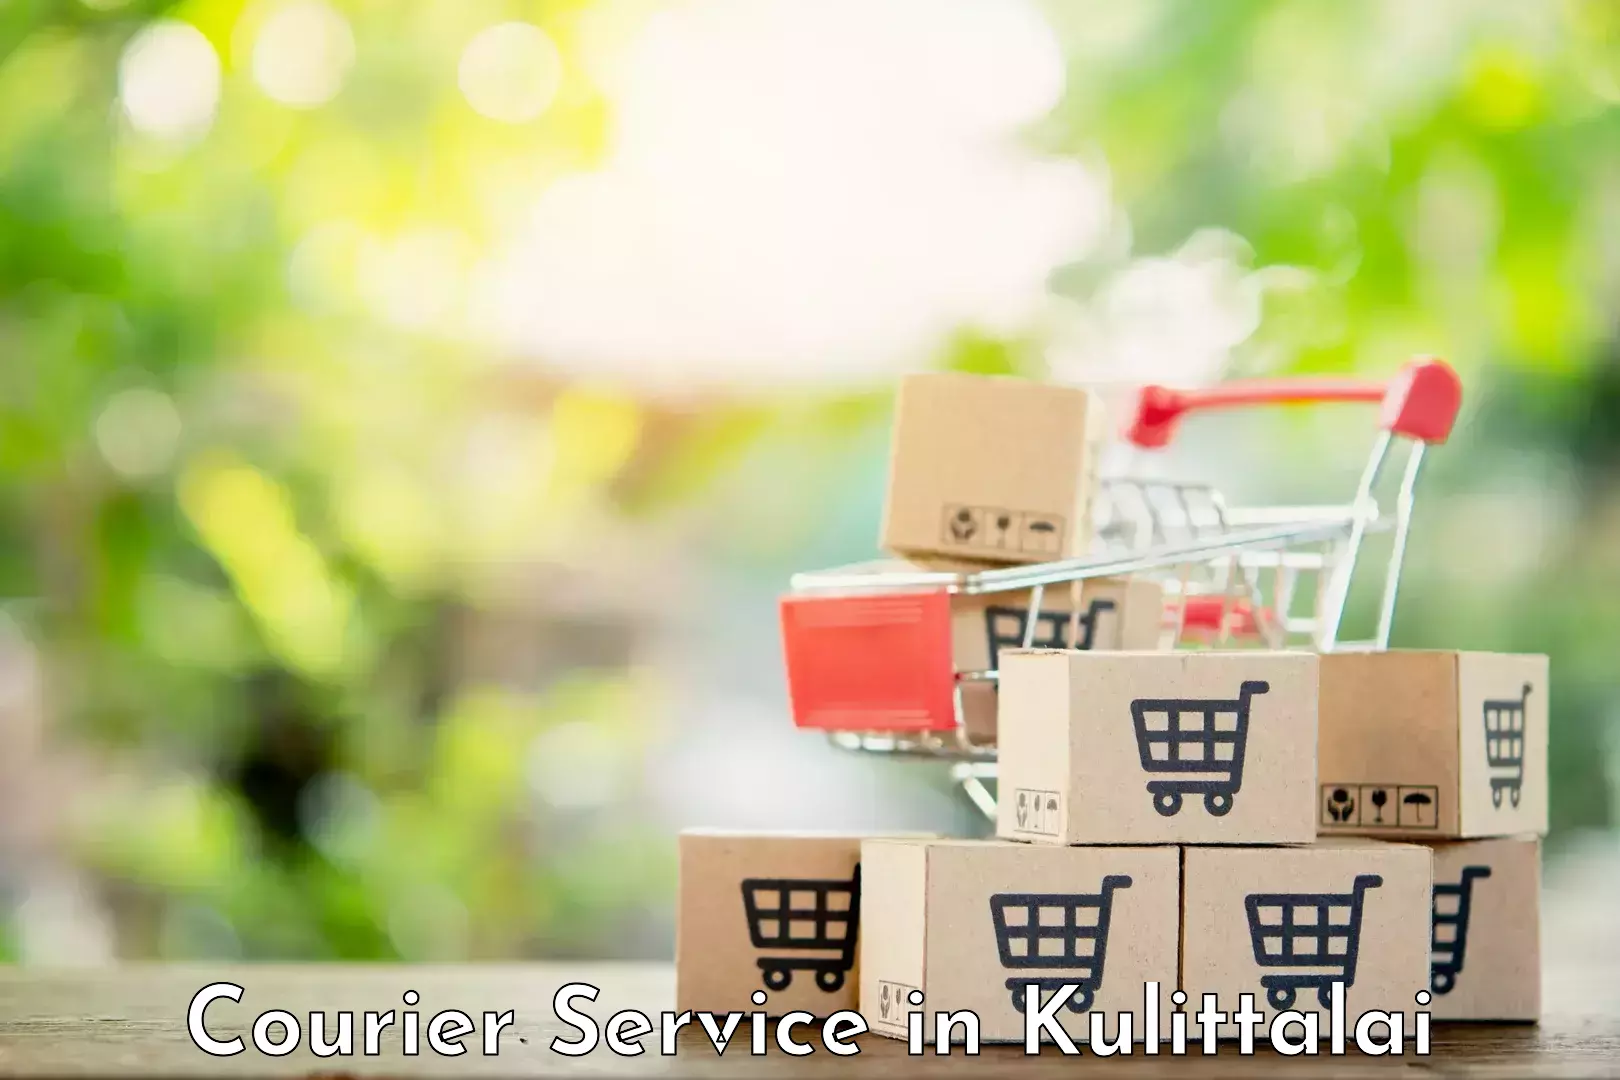 Customer-focused courier in Kulittalai